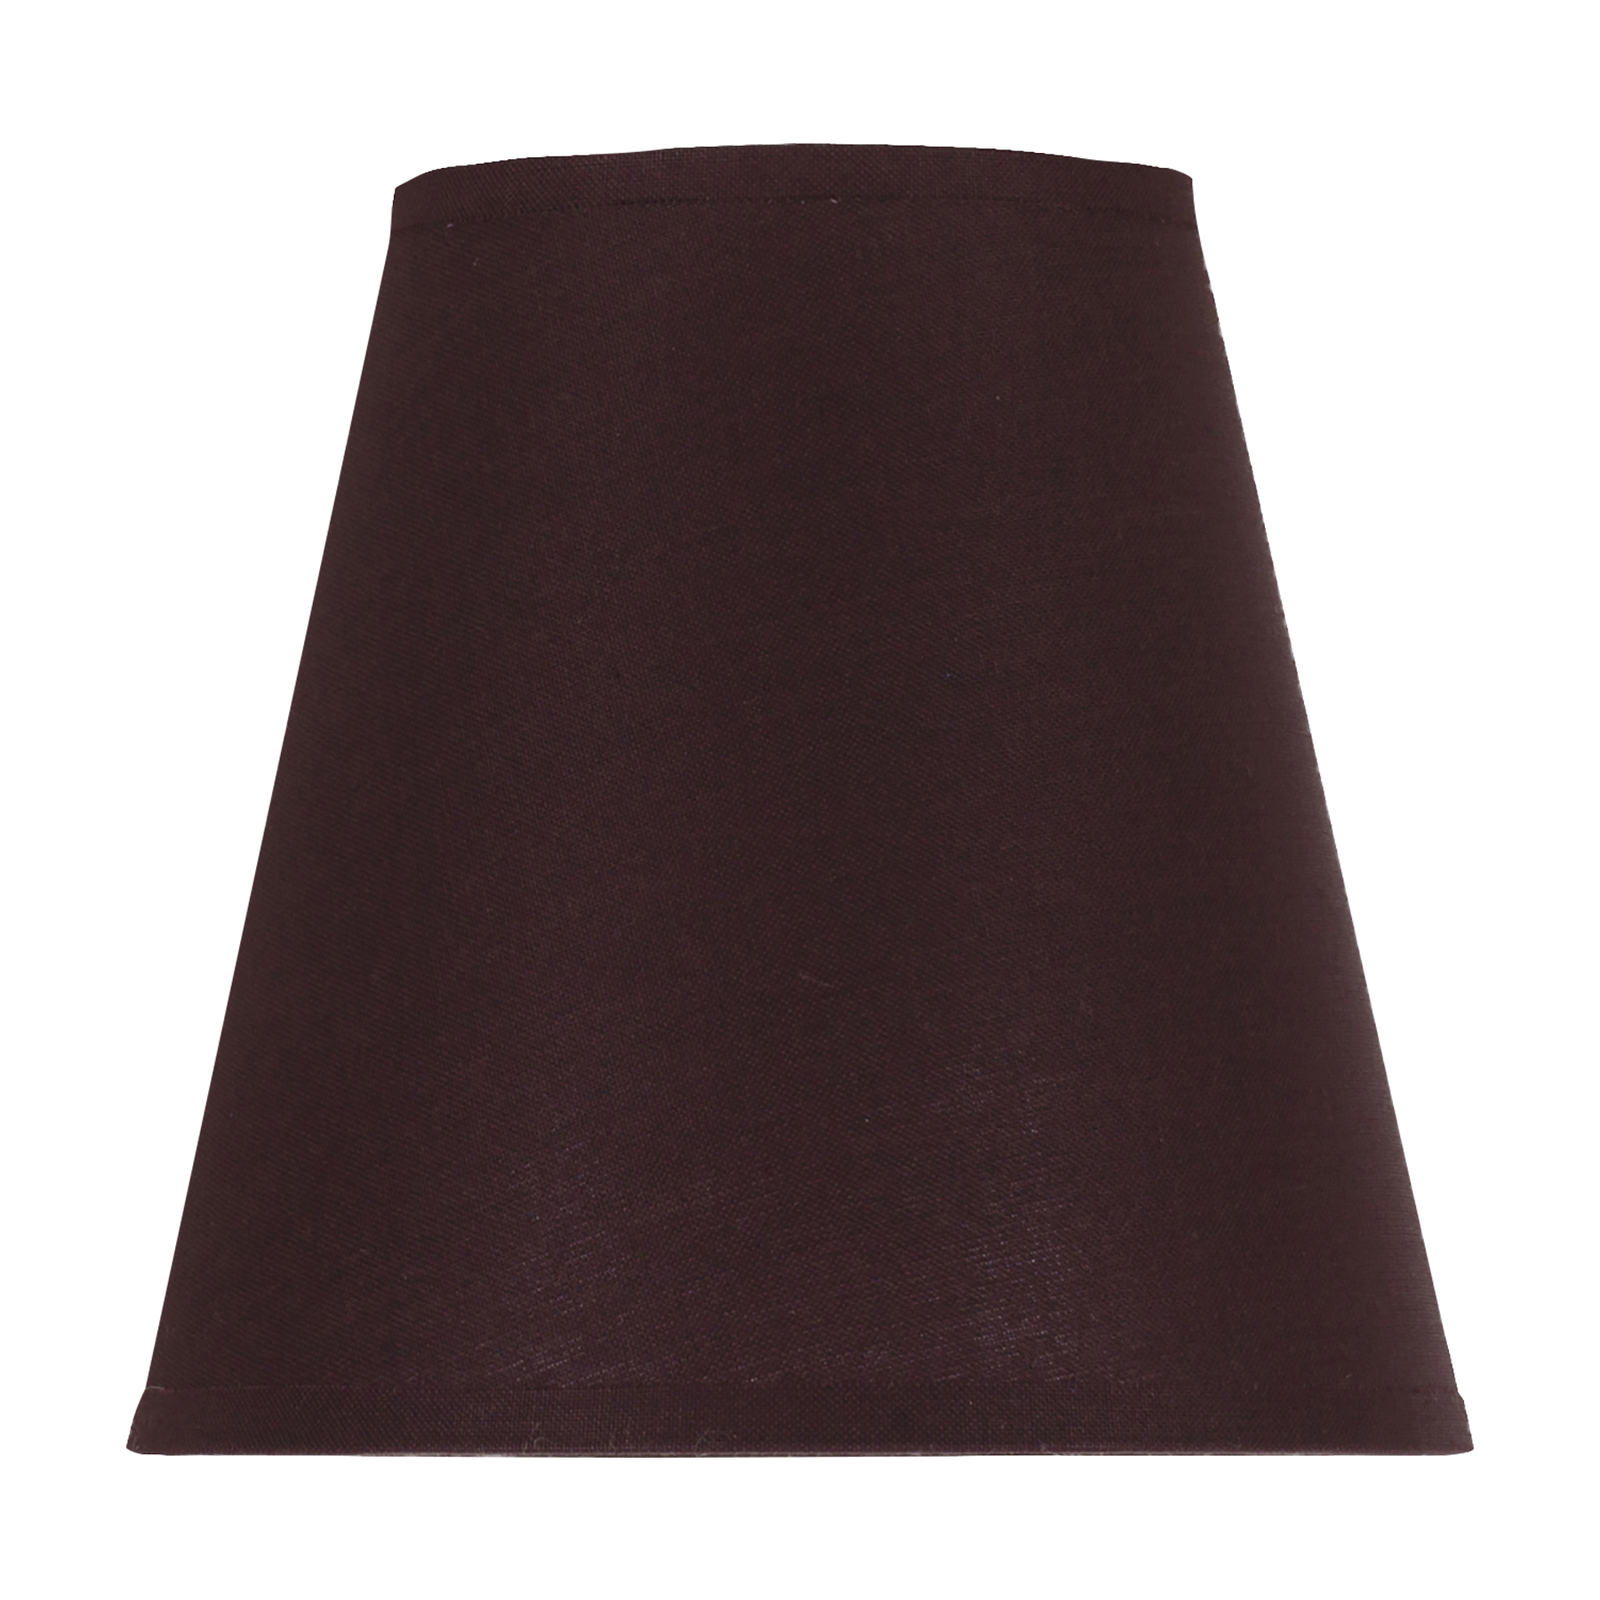 Cone AB lampshade, Ø 15 cm, dark brown